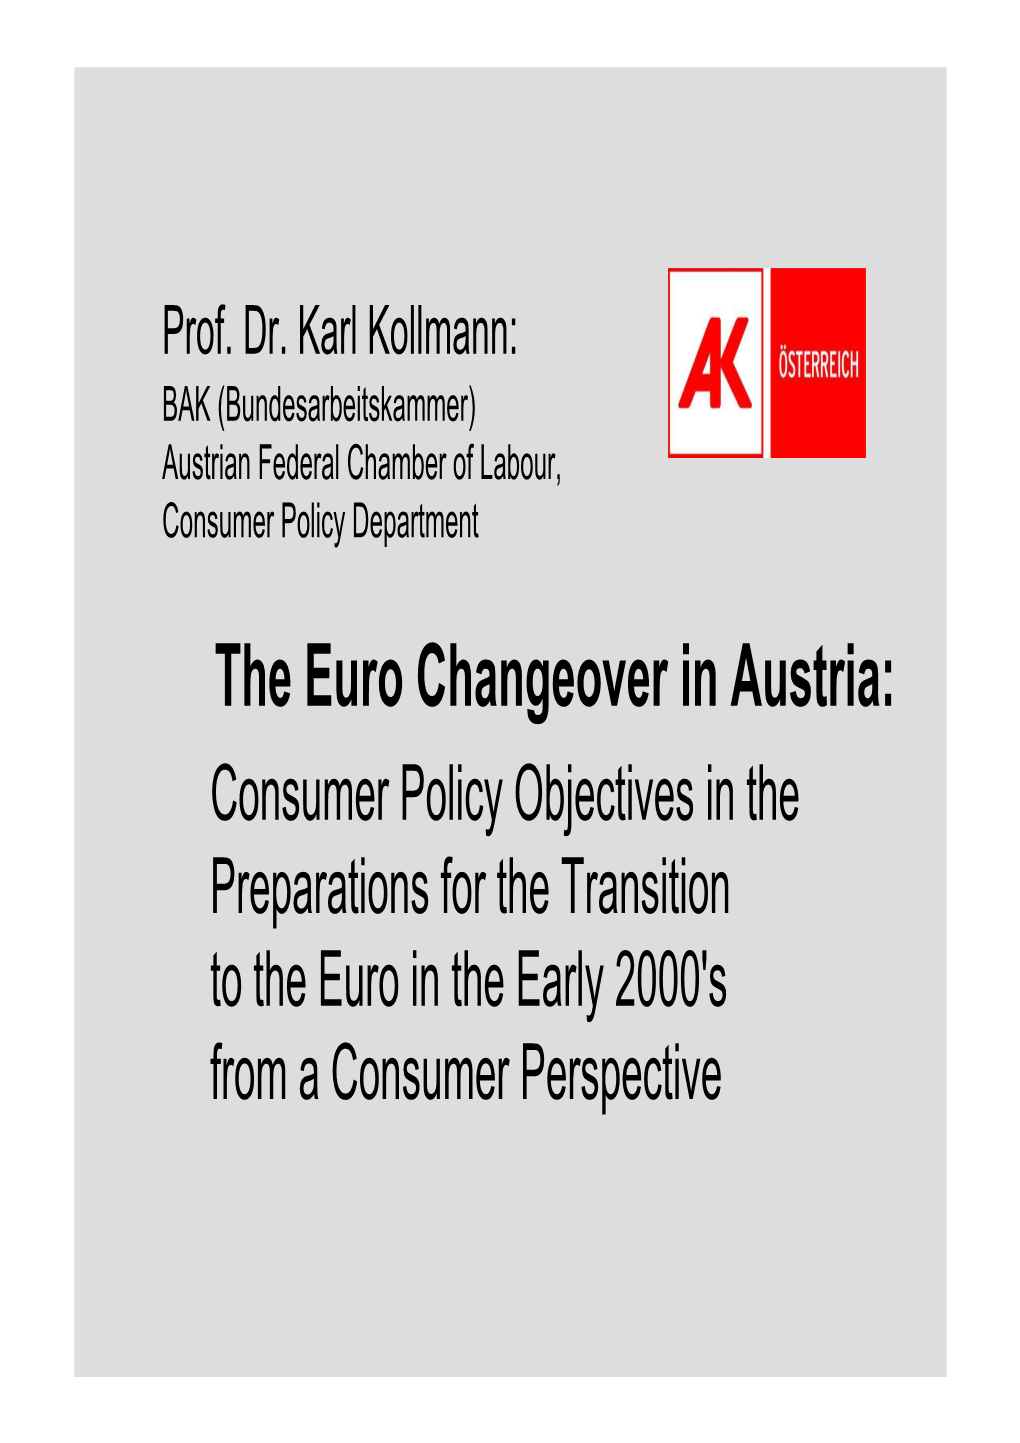 Karl Kollmann – Deputy Head, Consumer Protection Department